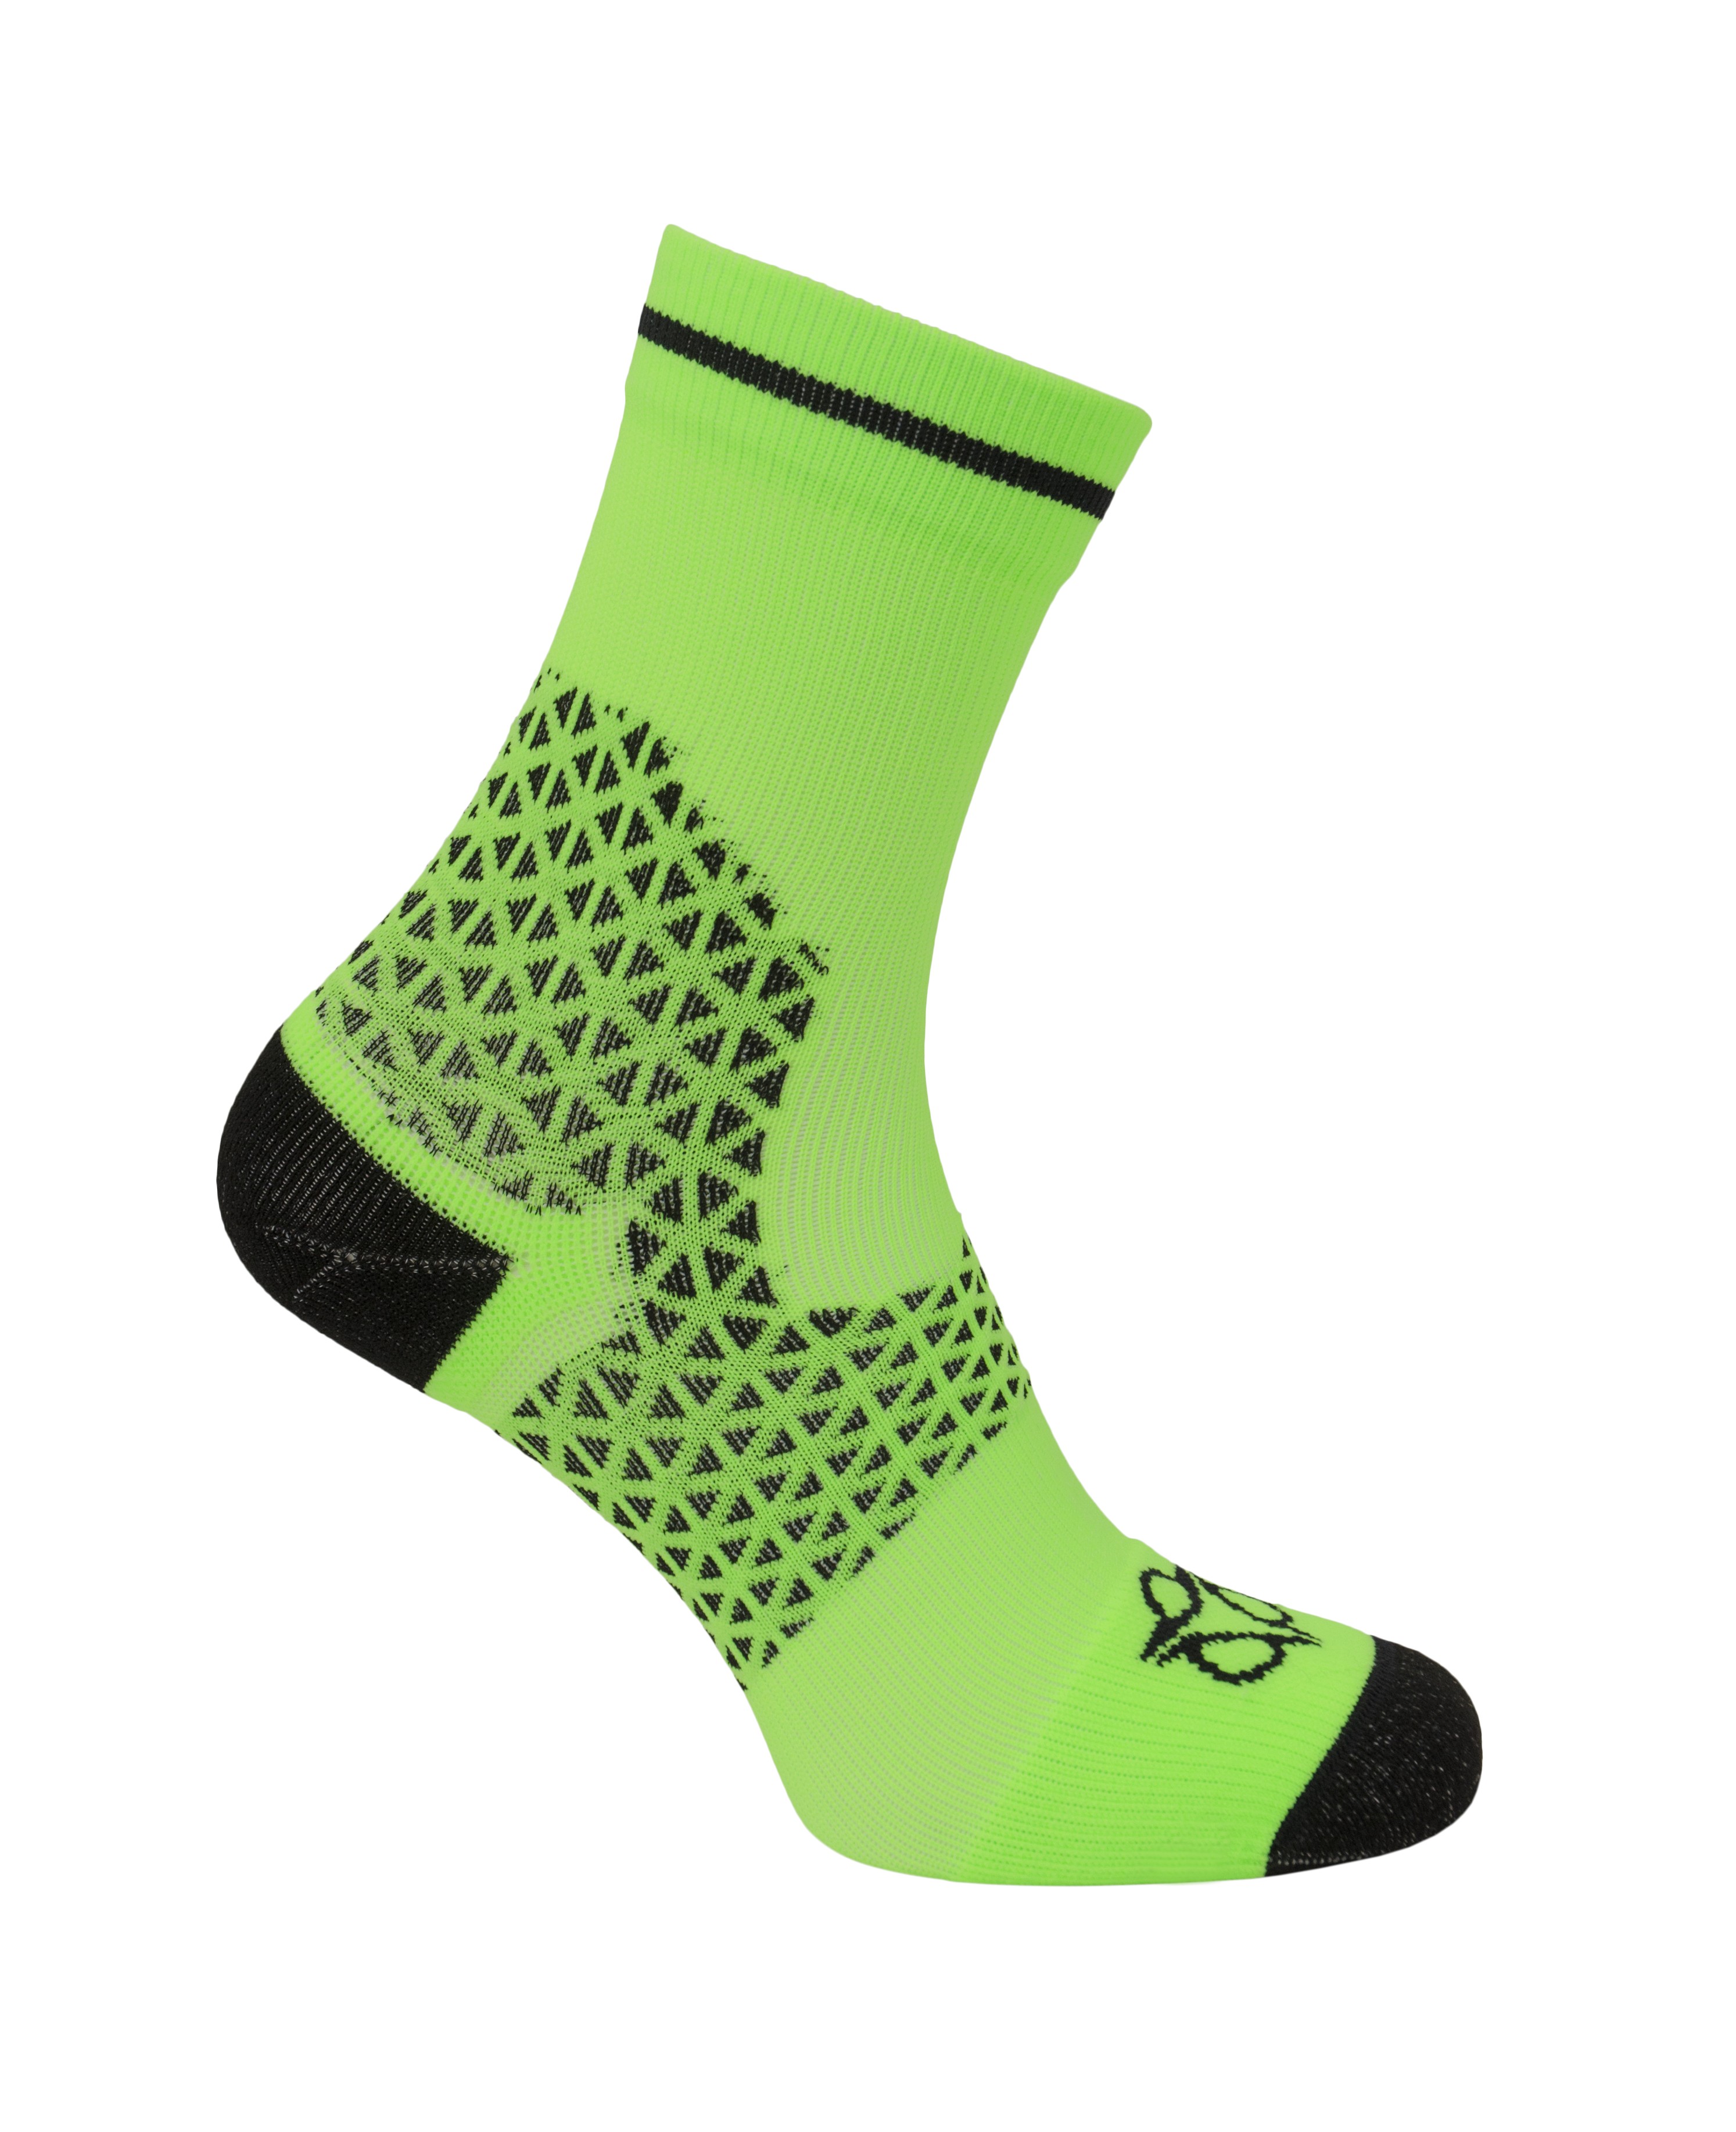 AGU Pro Summer Socks Green Black